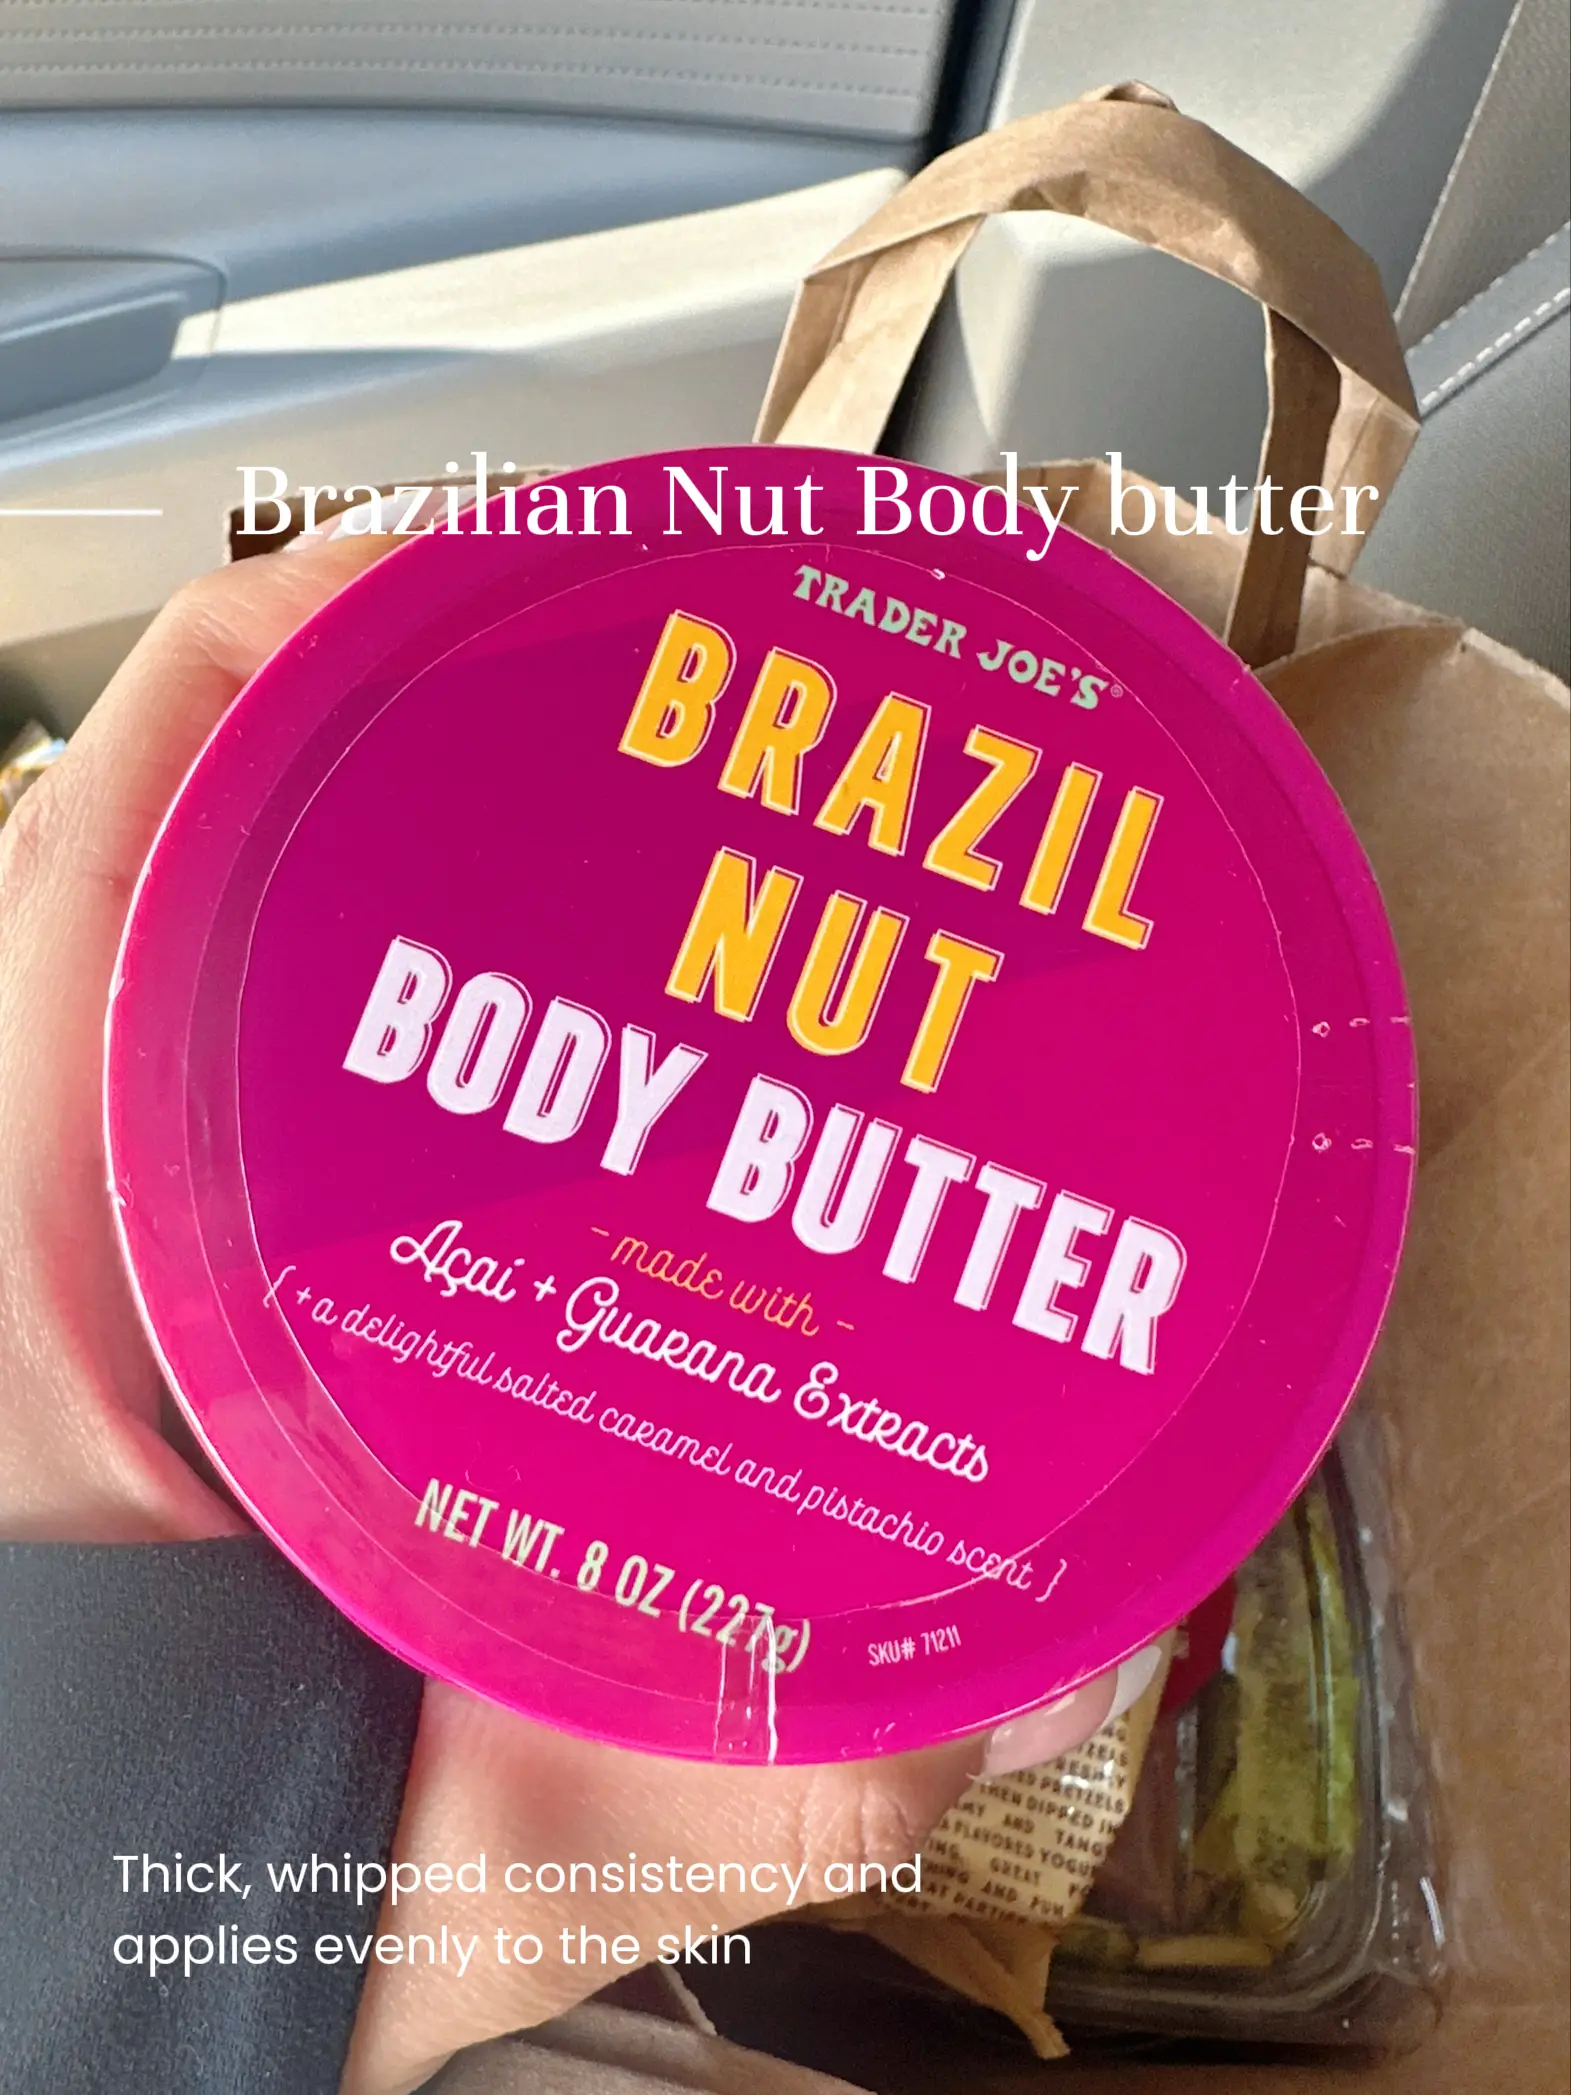 Trader Joe's Brazil Nut Body Butter Jar with Acai and Guarana